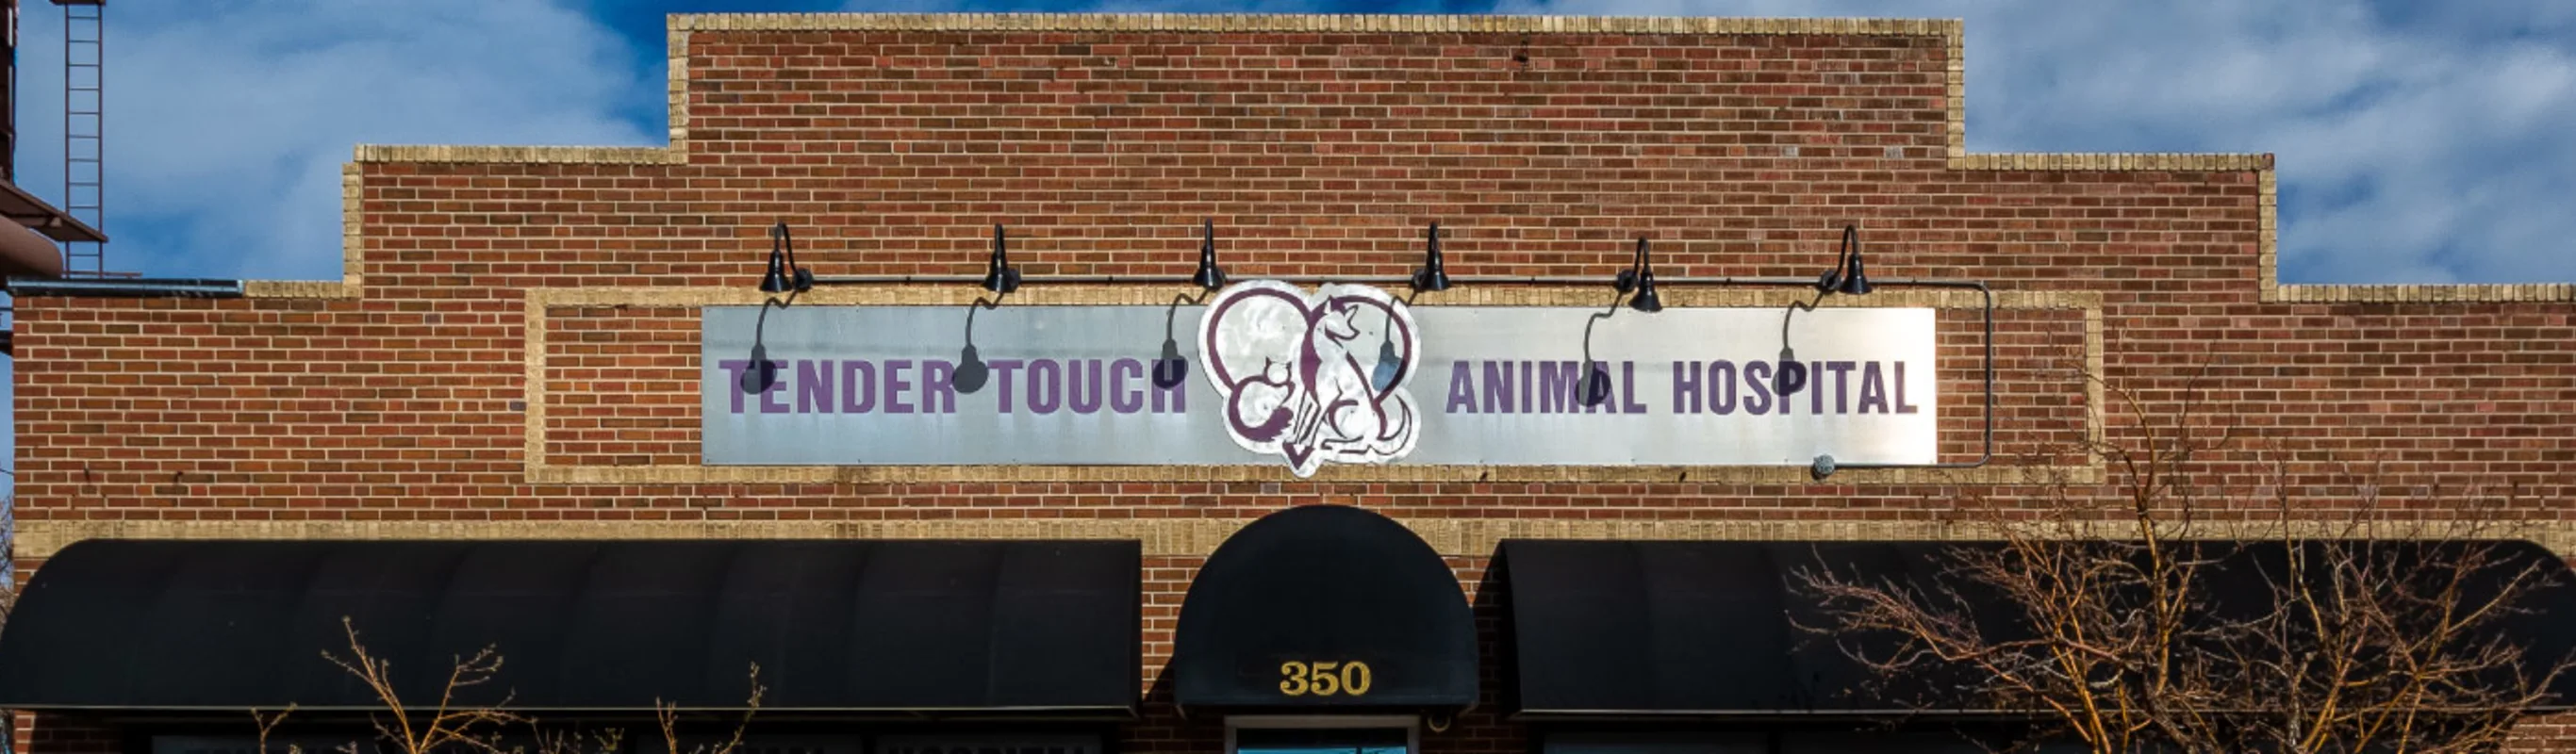 Tender Touch Animal Hospital facility back entrance